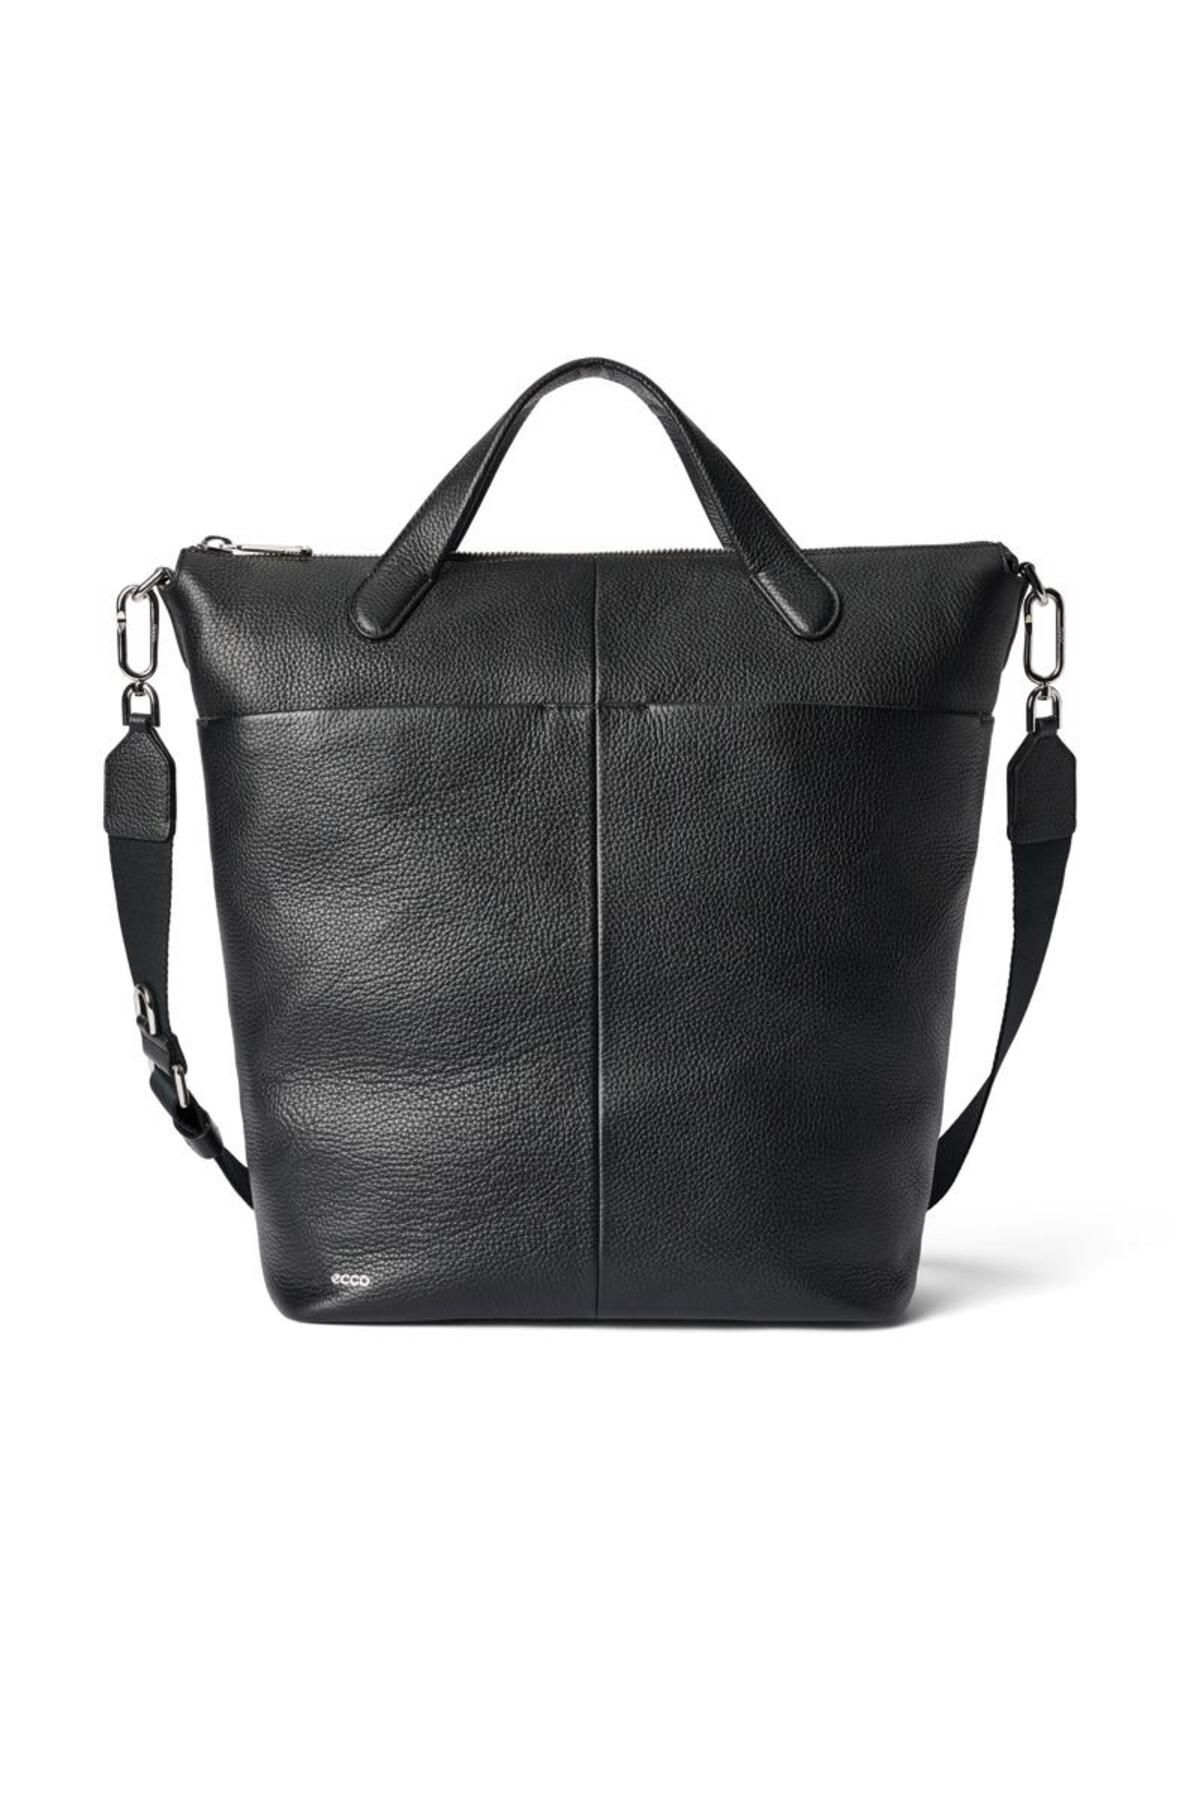 Ecco Tote L Pebbled Leather Bag